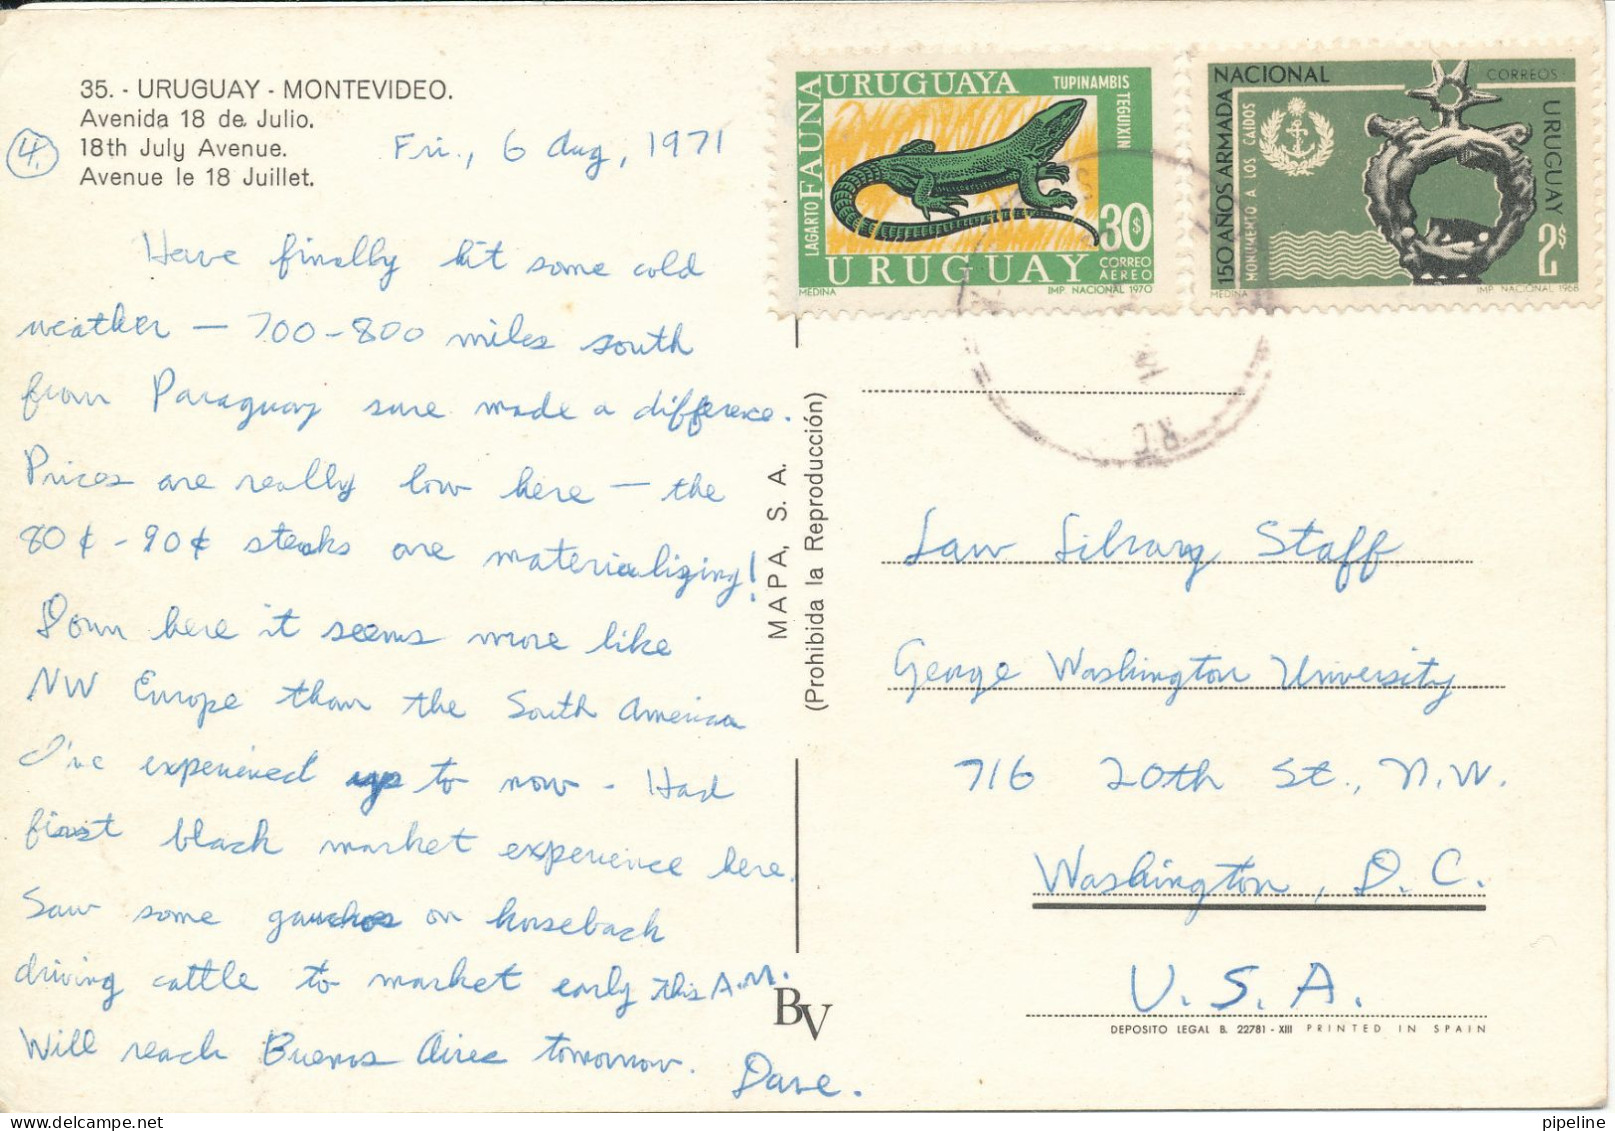 Uruguay Postcard Sent To USA 6-8-1971 (18th July Avenue) - Uruguay